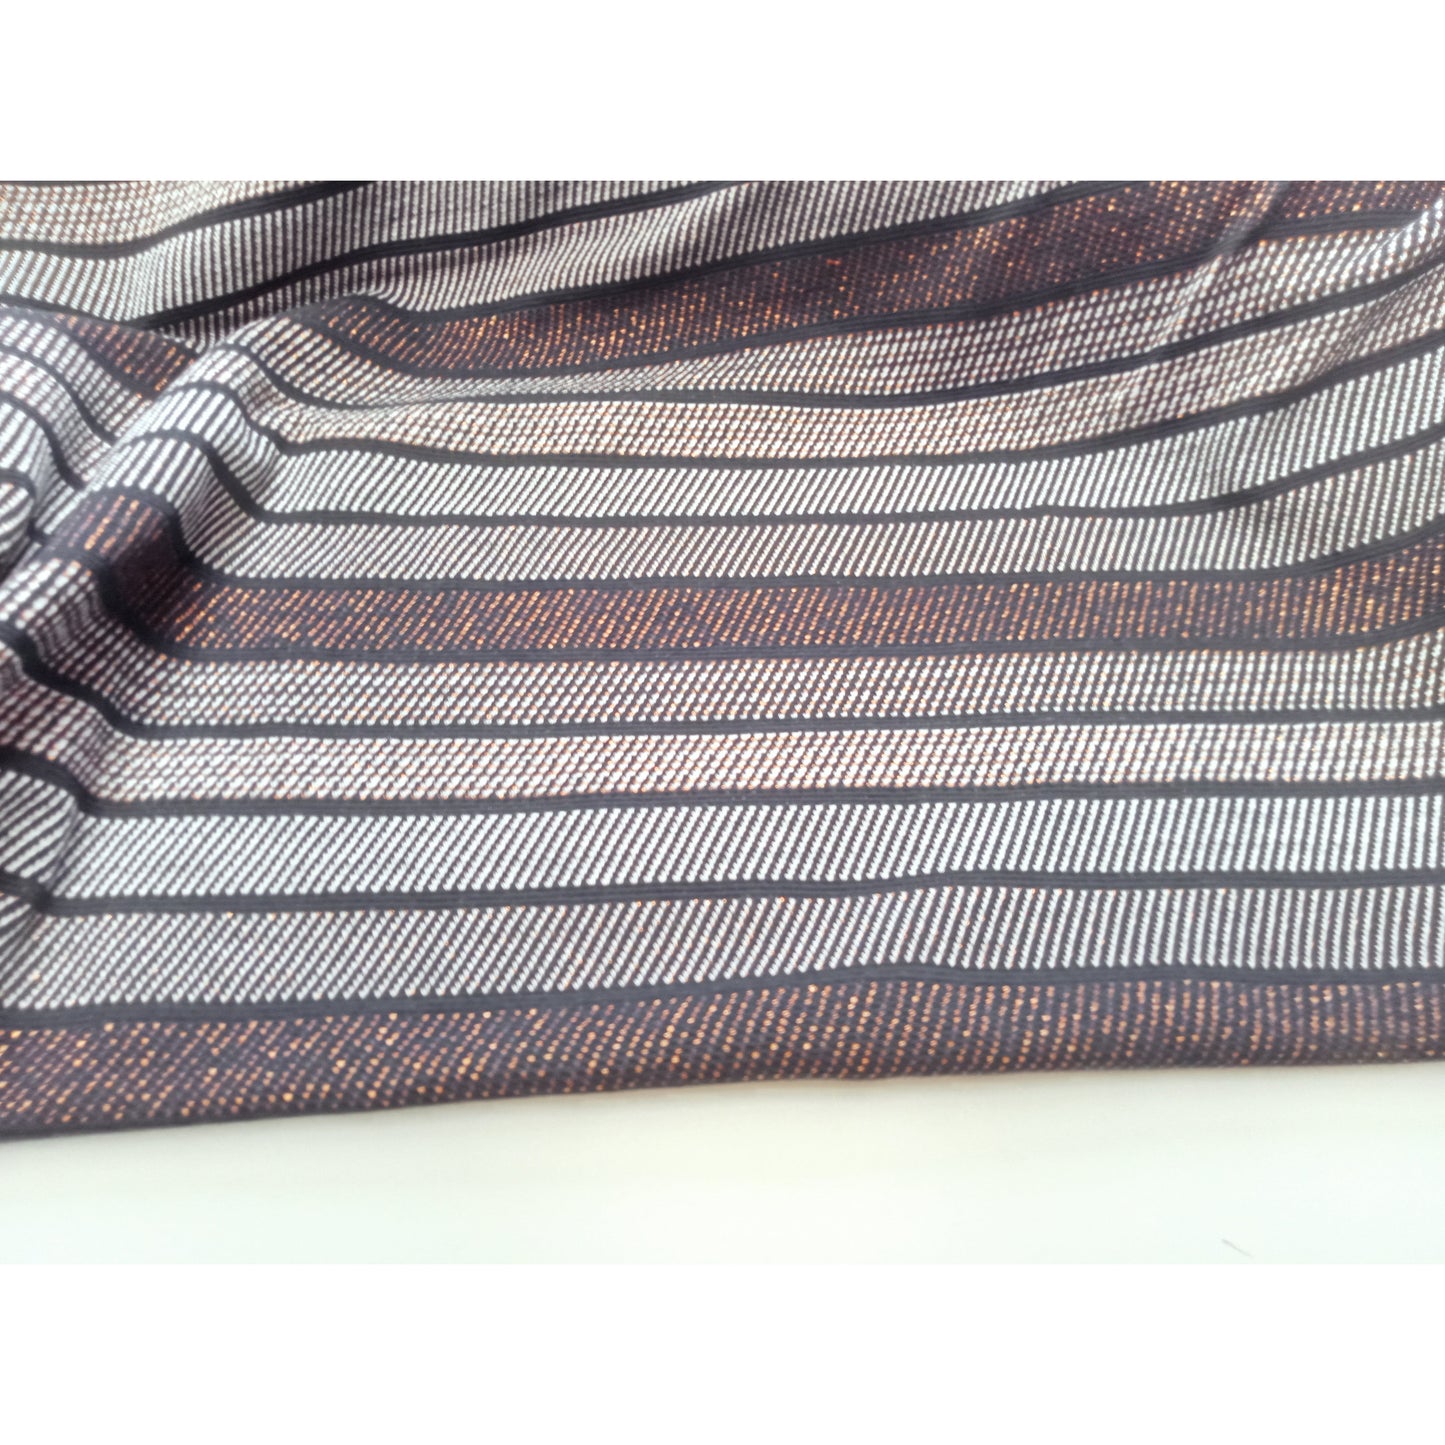 Terry- striped metallic knit